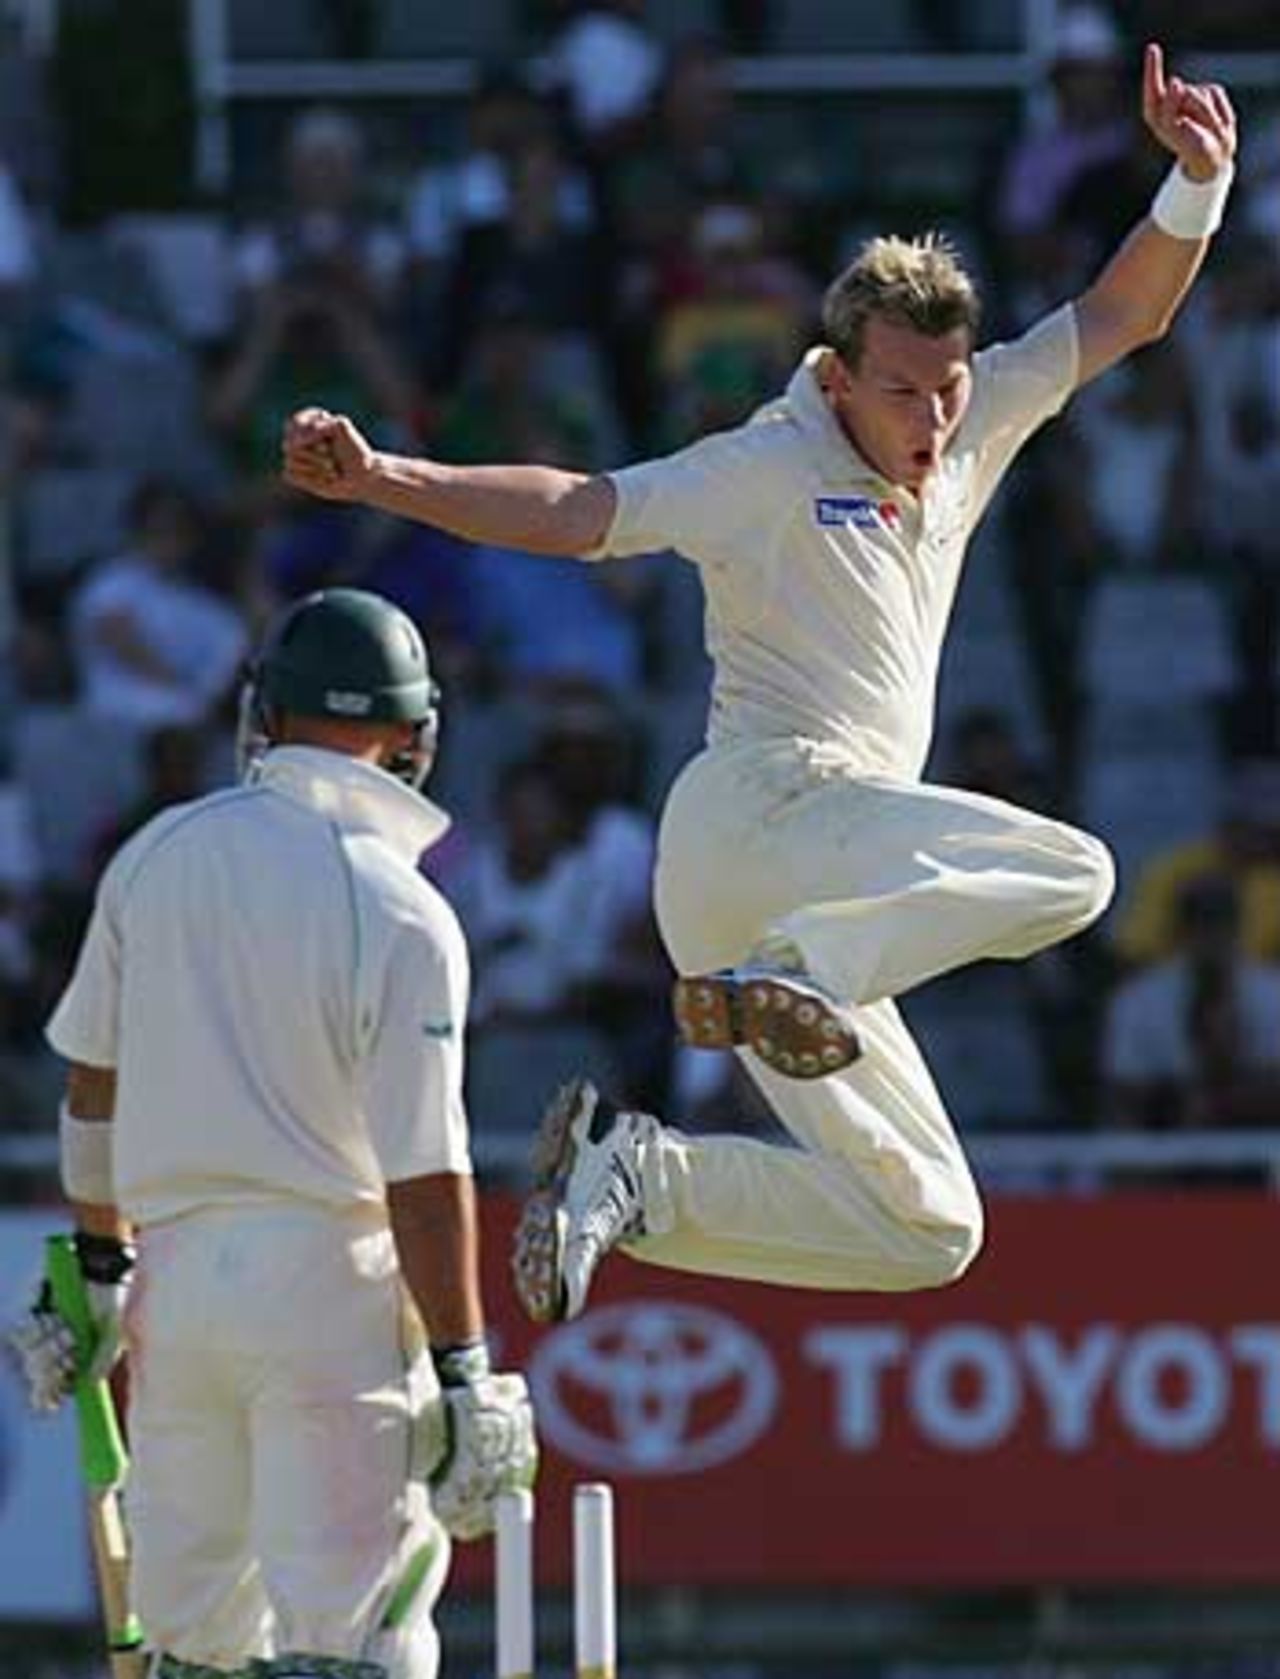 Brett Lee jumps for joy after bowling Herschelle Gibbs, South Africa v Australia, 1st Test, Cape Town, March 17, 2006